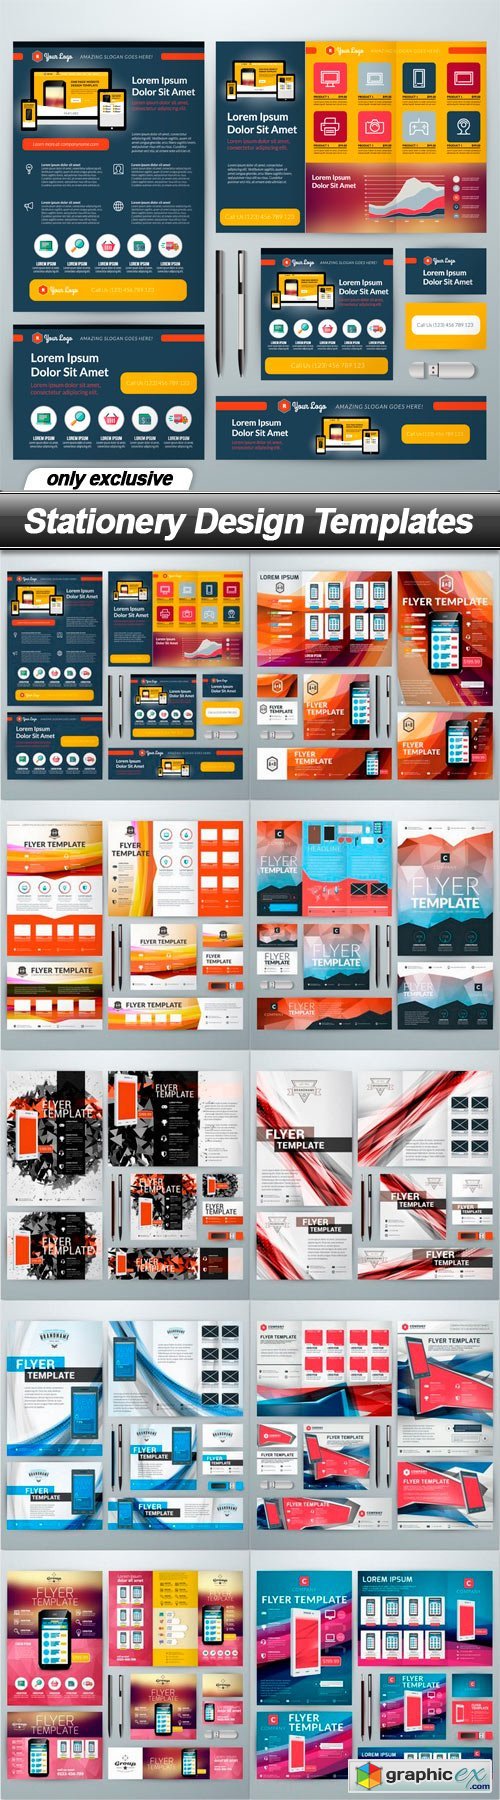 Stationery Design Templates - 10 EPS